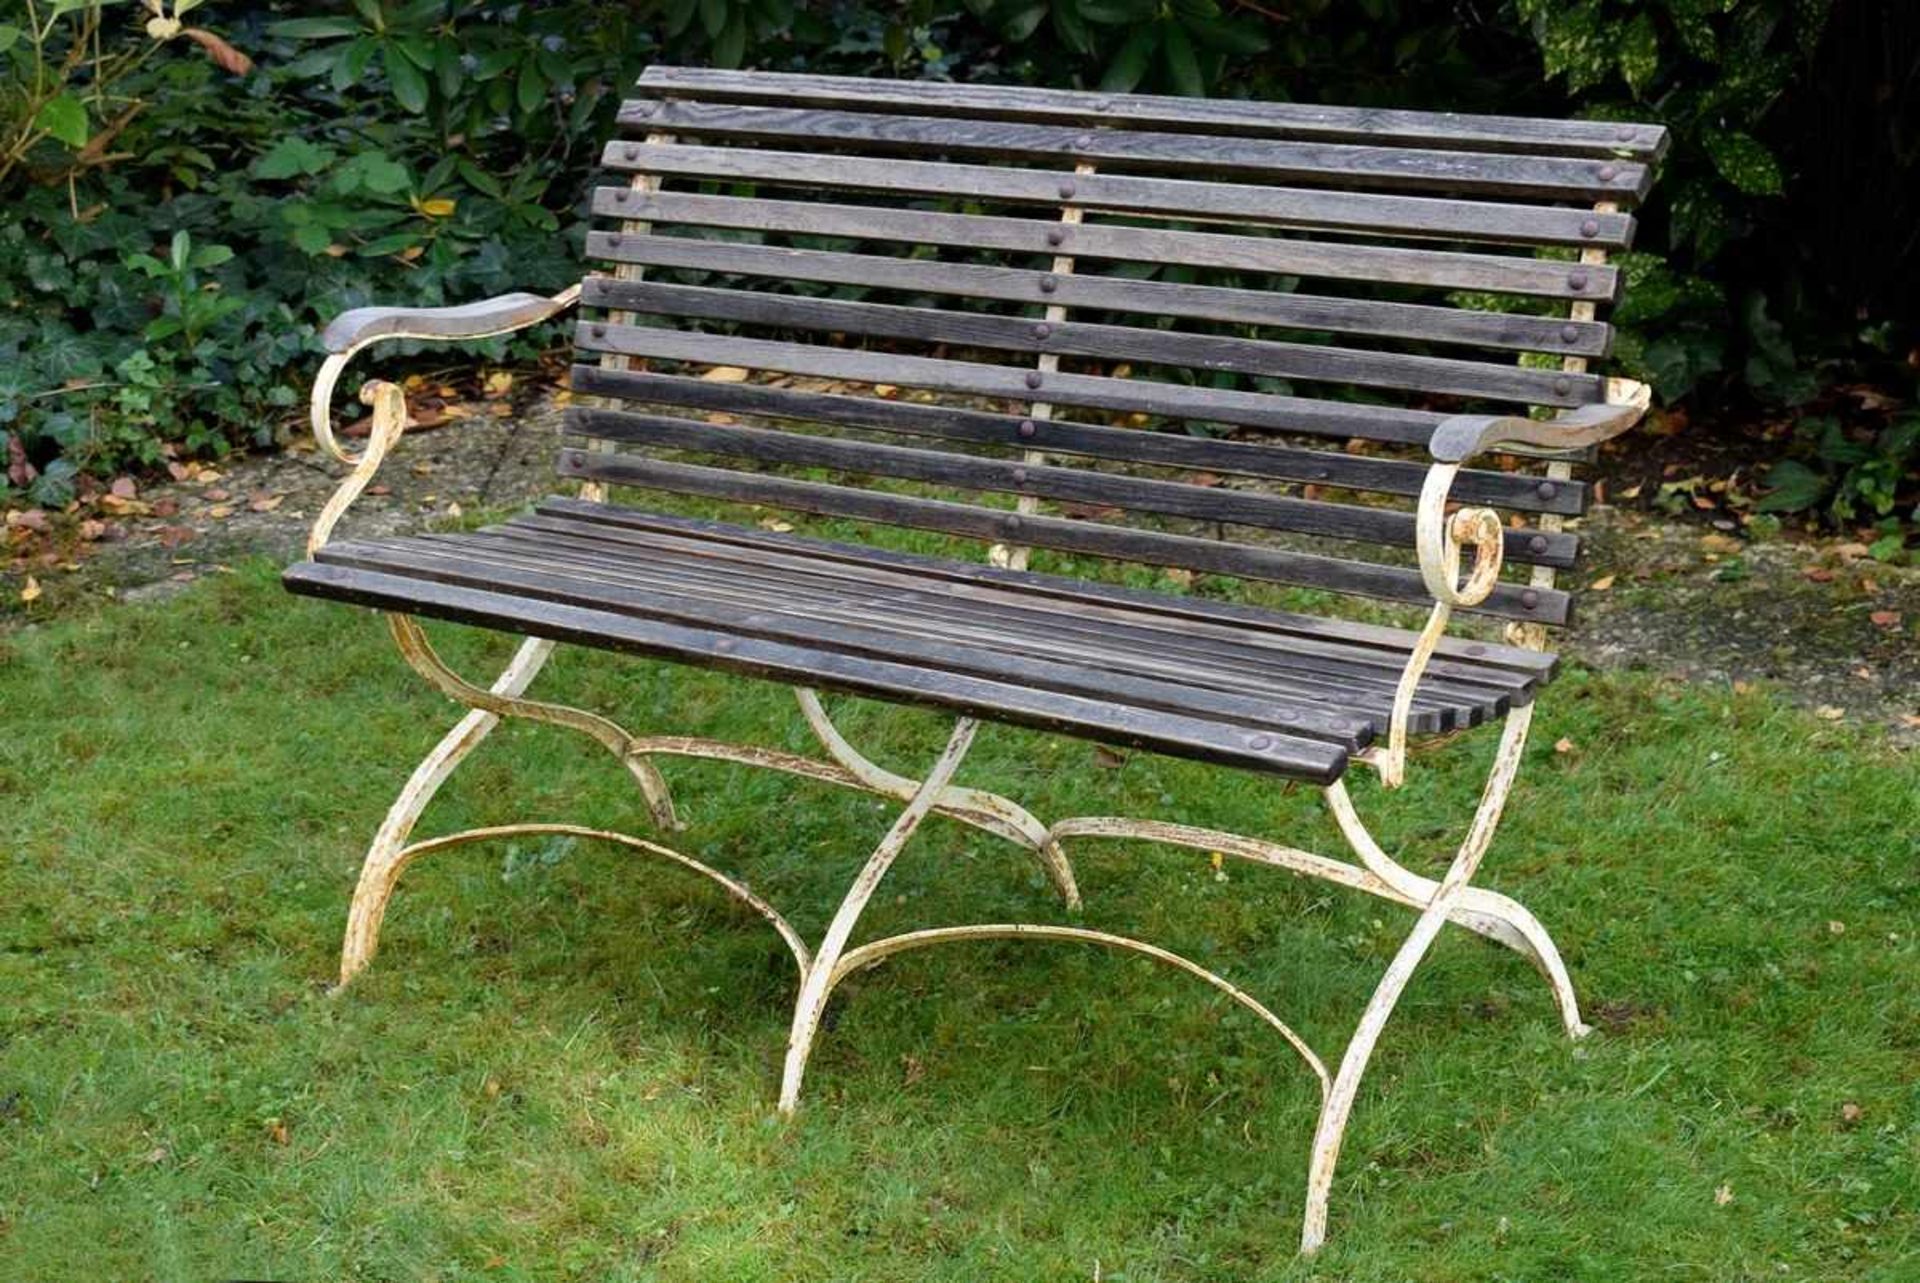 Klappbare Gartenbank, Holz/Metall, 84x134x50cm, Sitzhöhe 48cmGarden bench, wood/metal, 48/